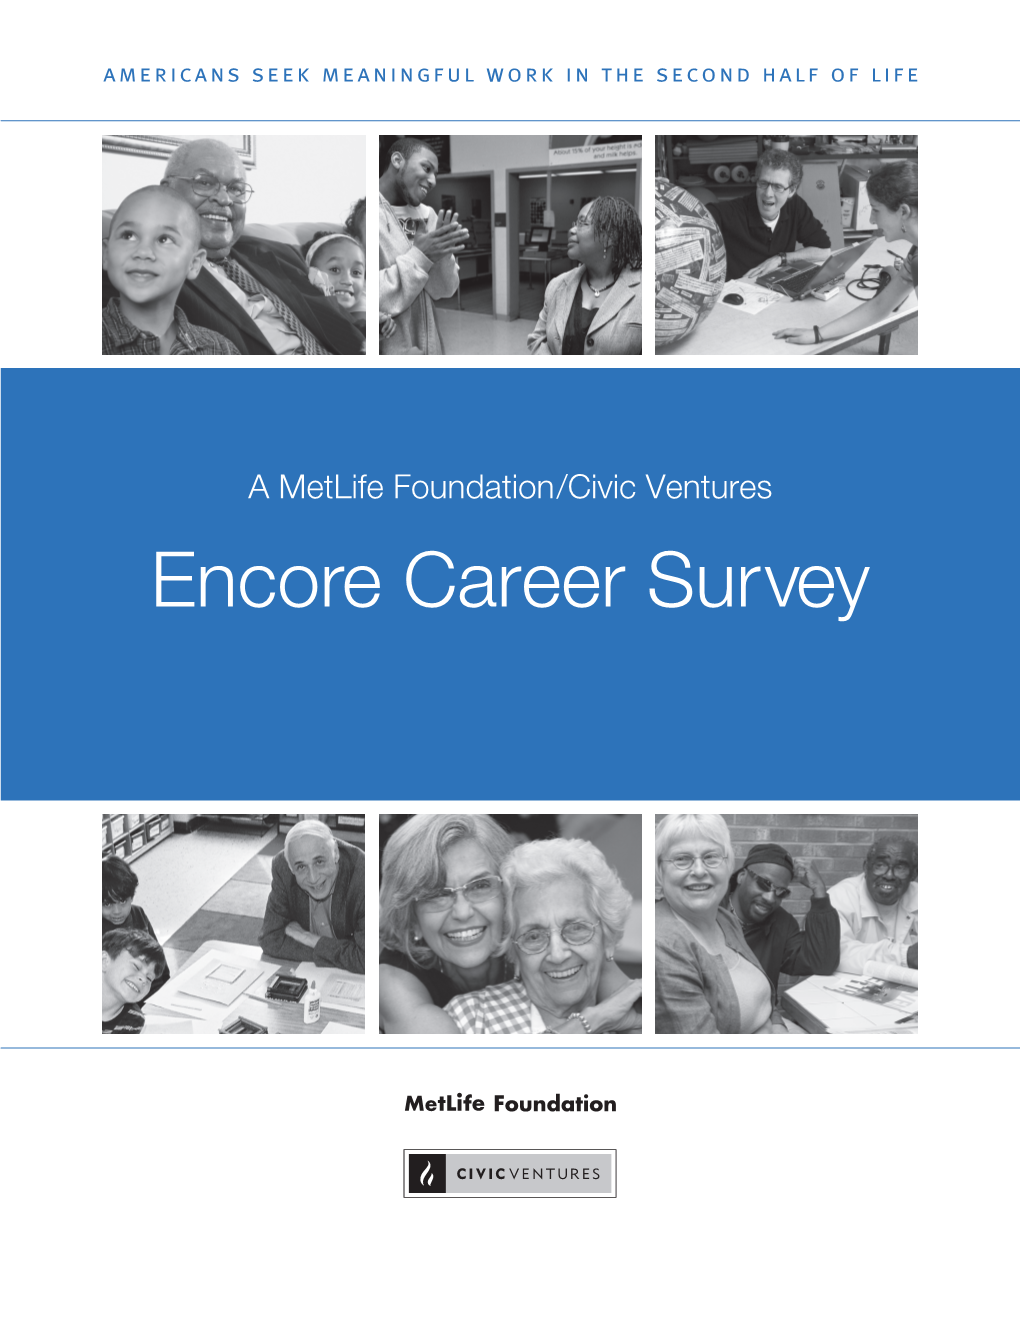 Metlife Foundation/Civic Ventures Encore Career Survey 2008